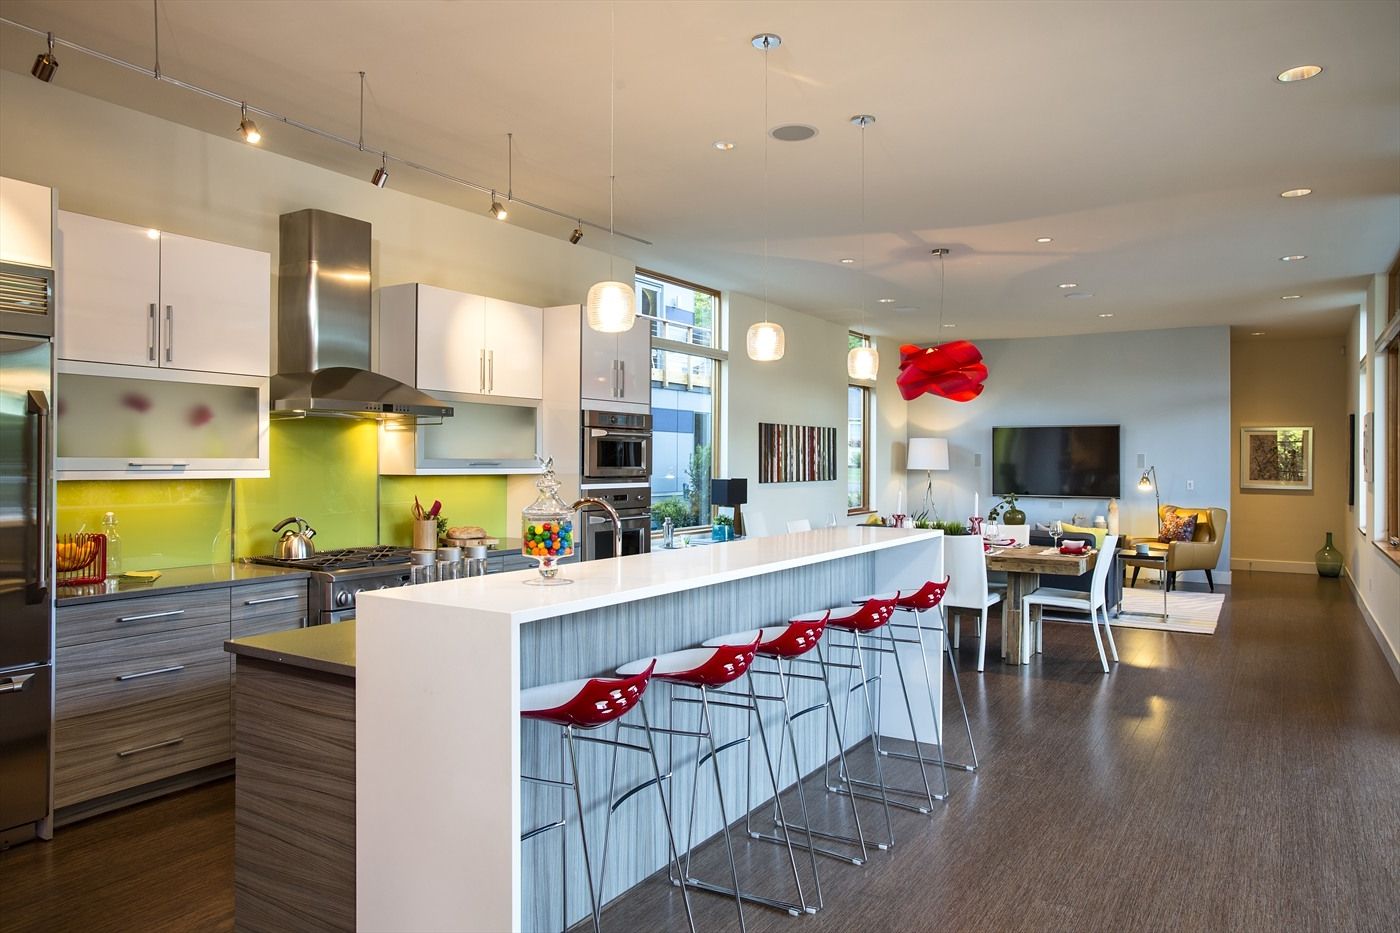 Ultra Modern Metal Barstools Design Plus Colorful Backsplash Idea And Long Narrow Kitchen Island (Photo 3065 of 7825)